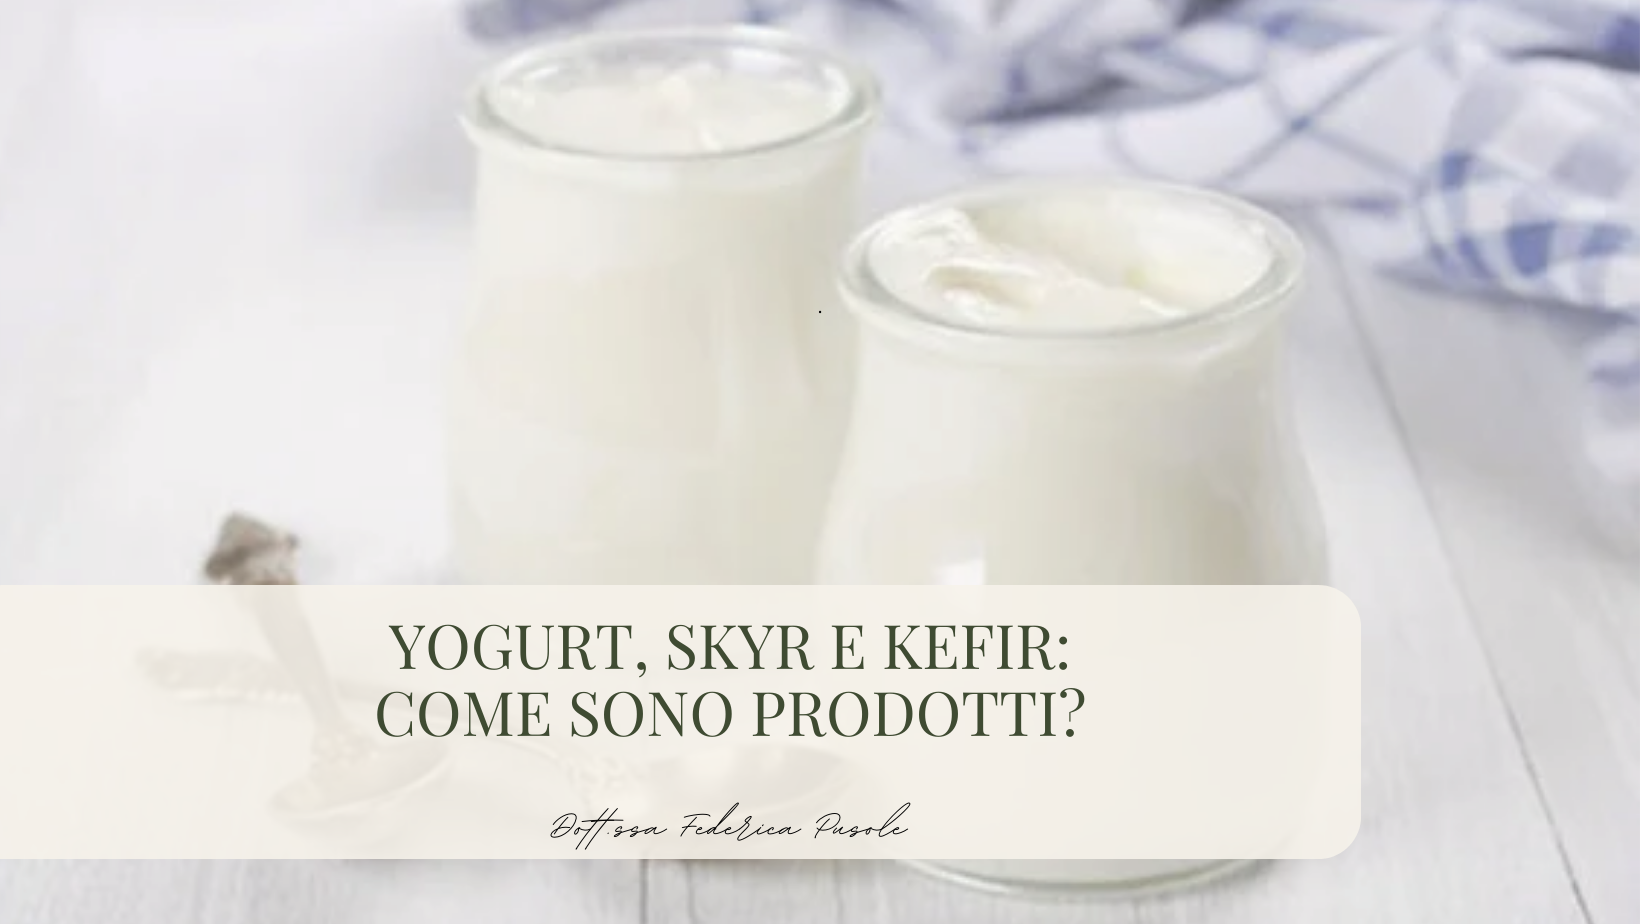 Yogurt, skir e kefir: come sono prodotti?